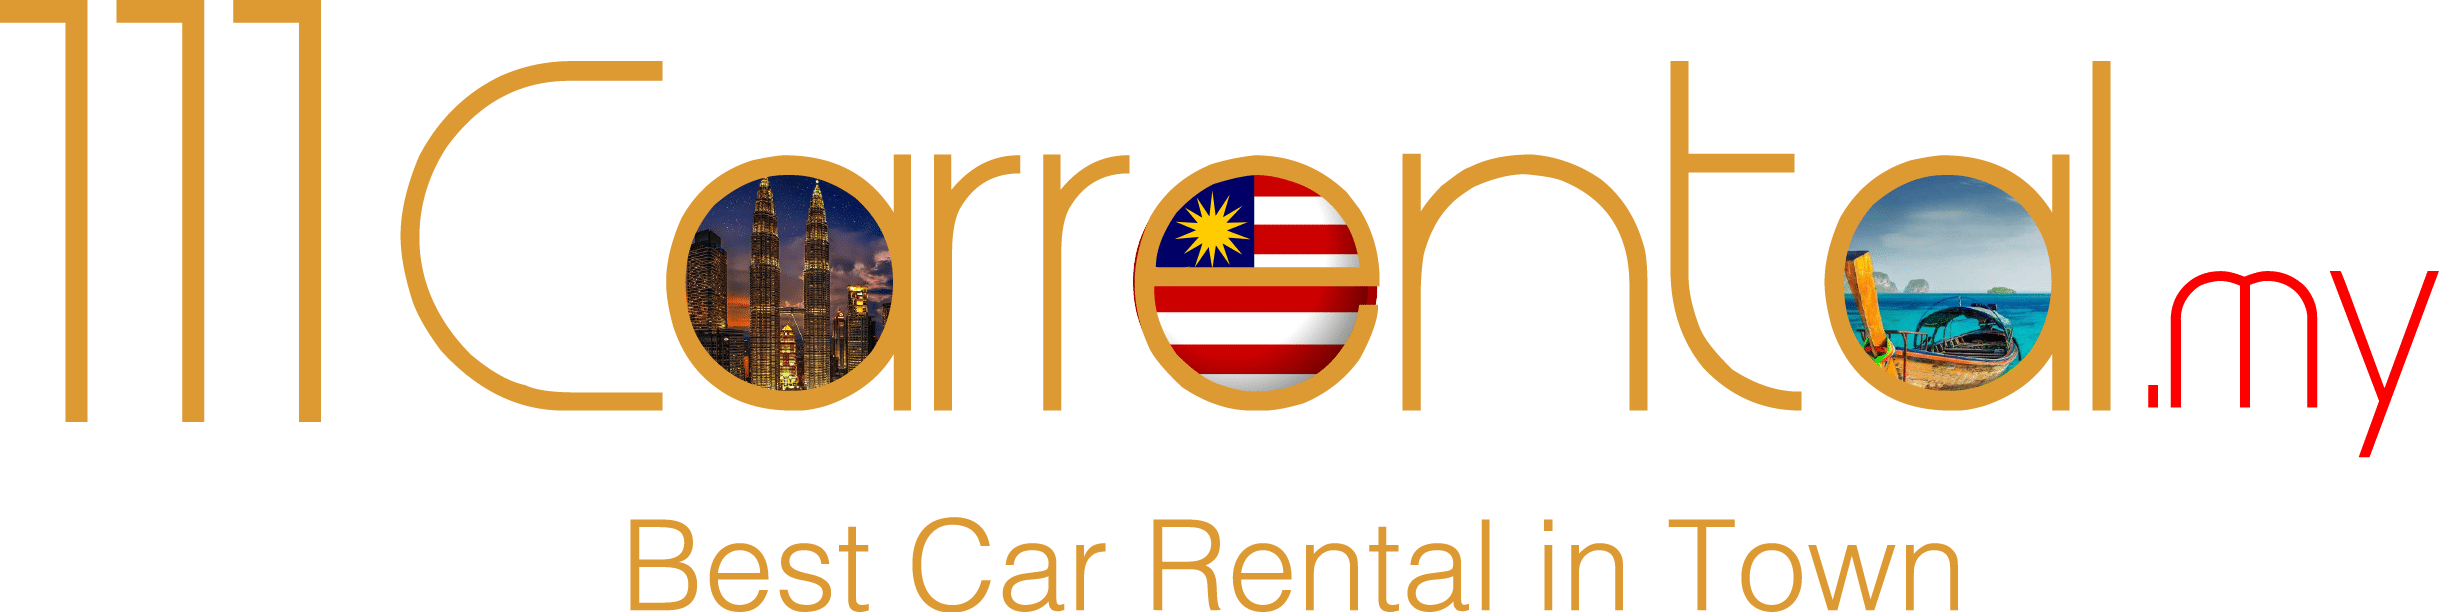 111 Car Rental | Shop - 111 Car Rental